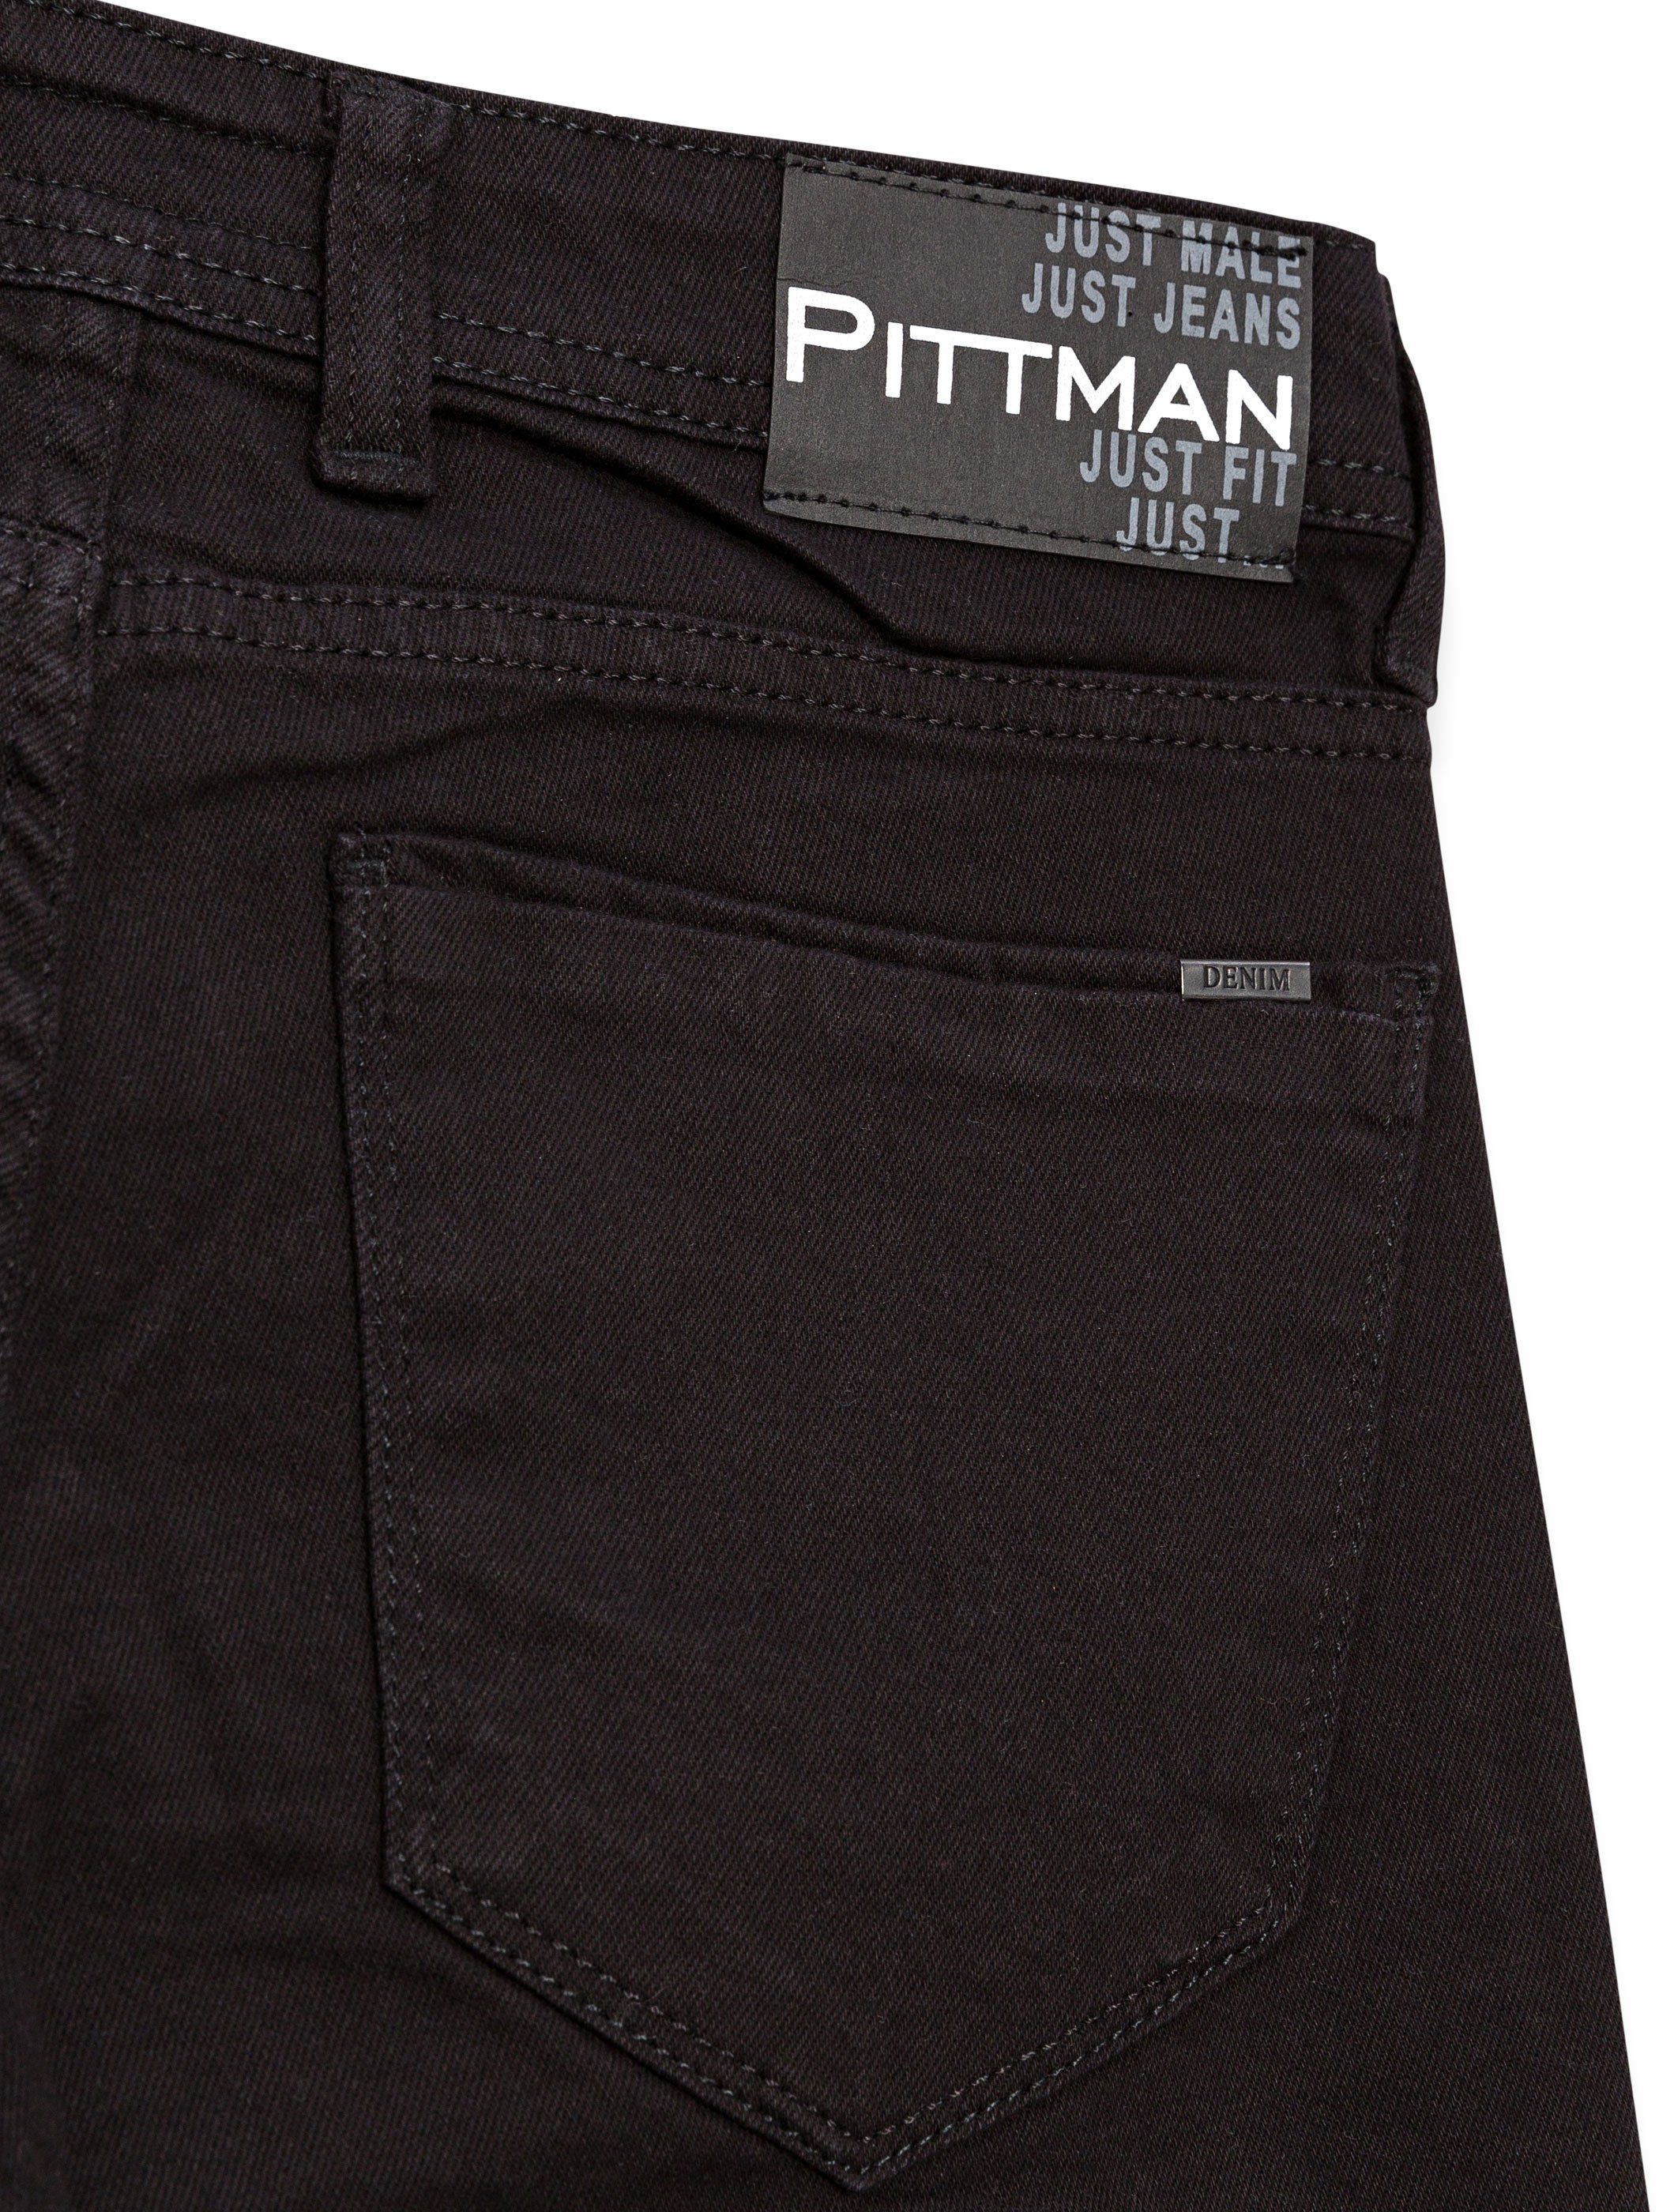 Pittman Destroyed-Jeans Ragner Black (194004)